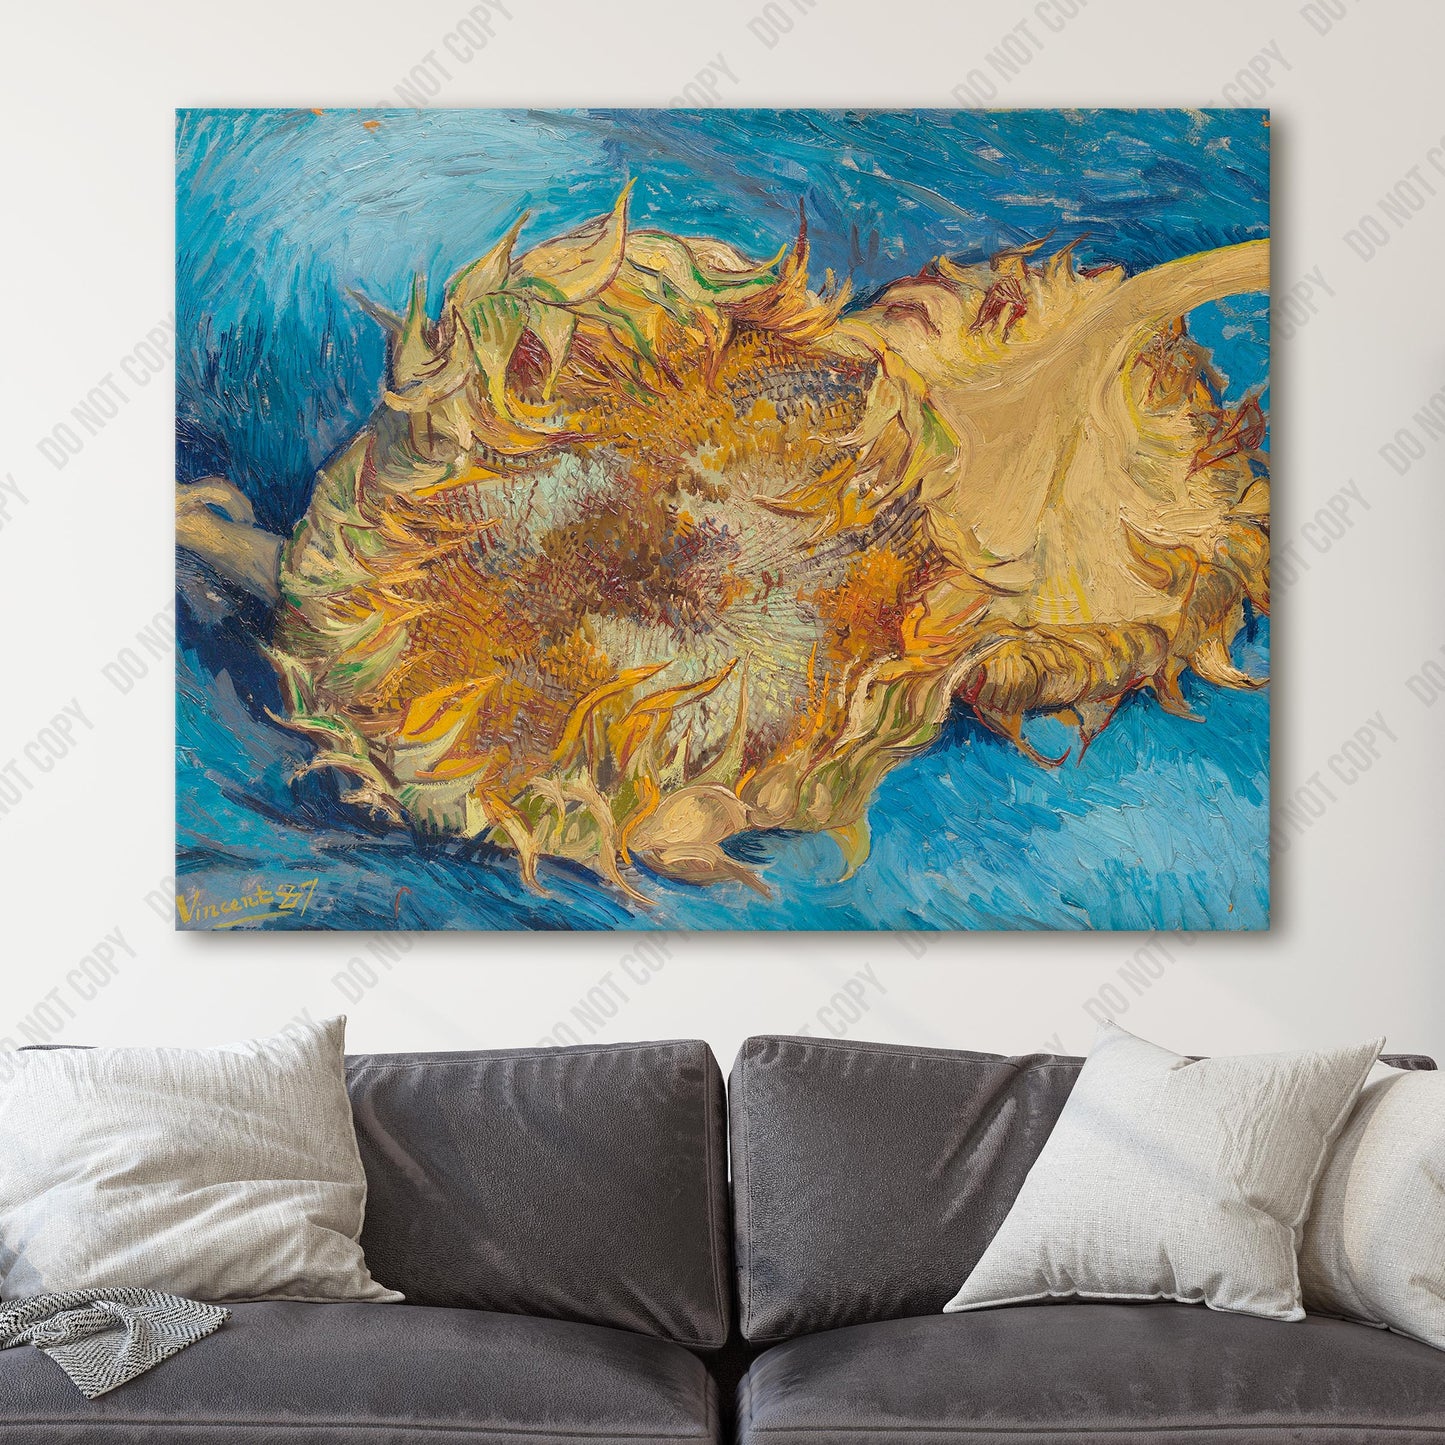 Sunflowers (1887) by Van Gogh